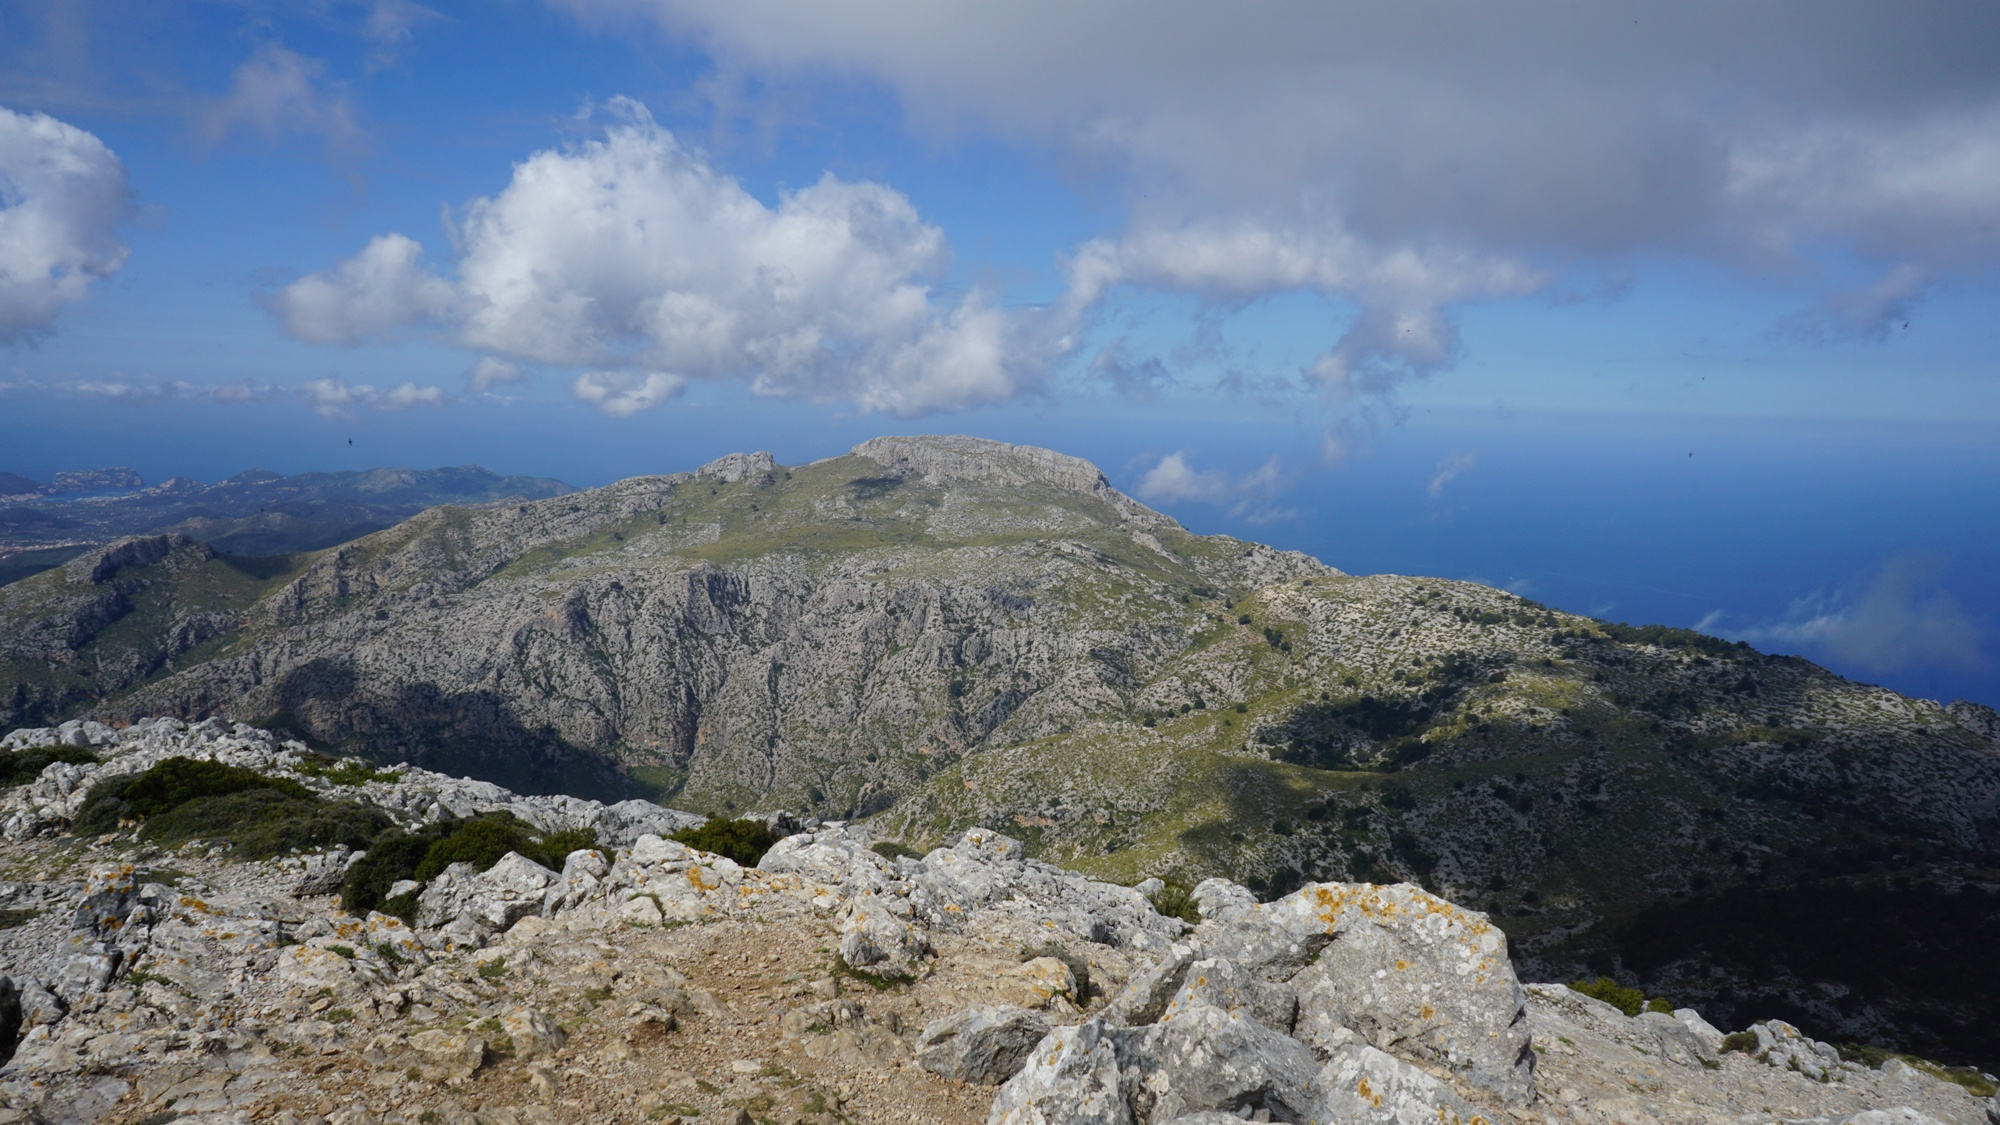 Der Blick vom Gipfel des Puig de Galatzó nach Westen auf den Moleta de s’Esclop.